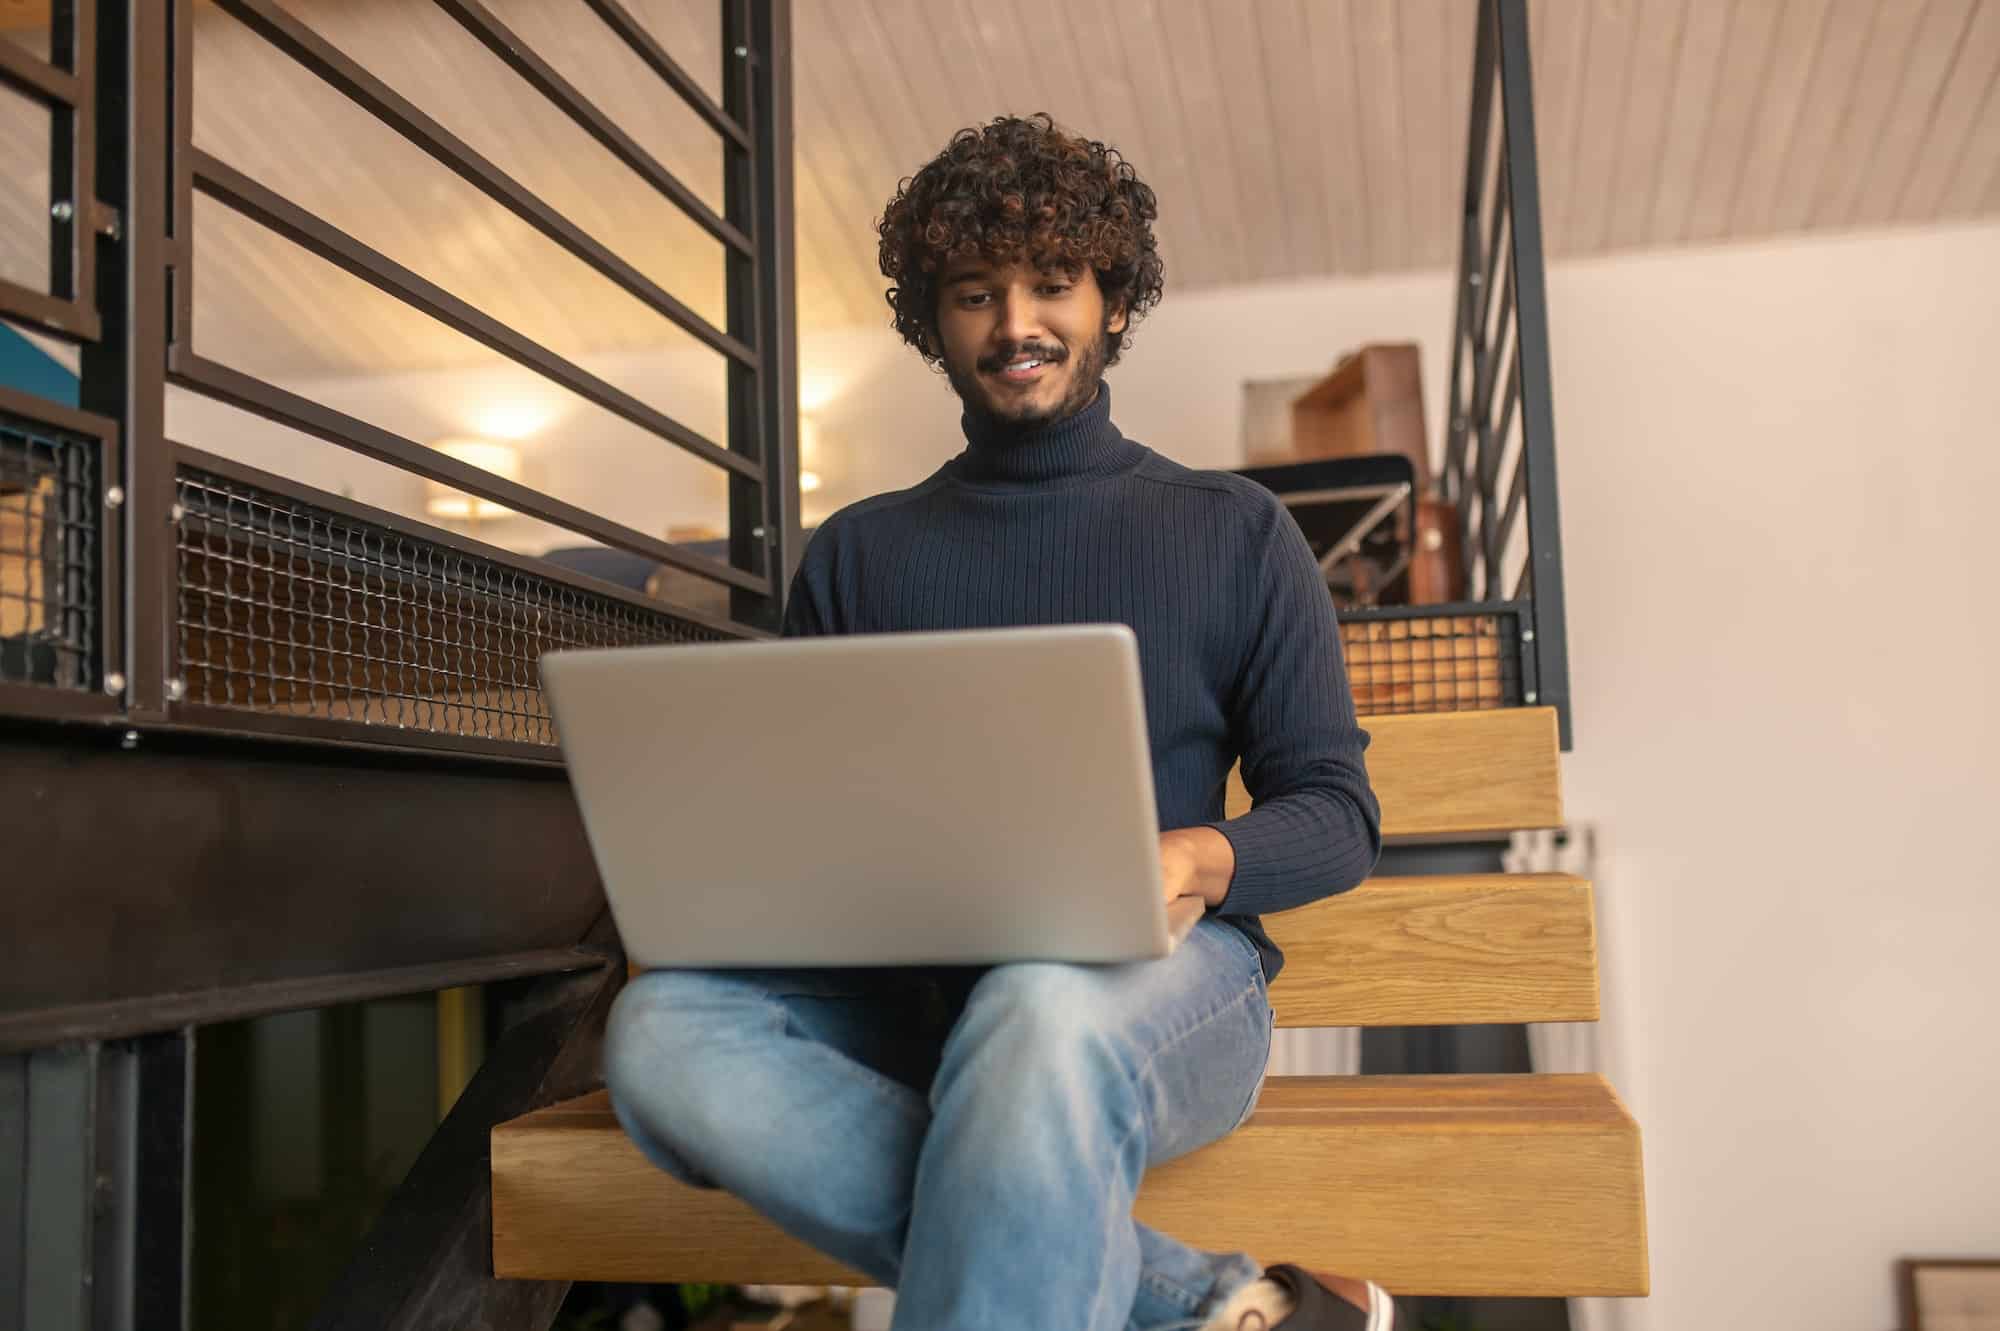 Man sitting on steps smiling looking at laptop